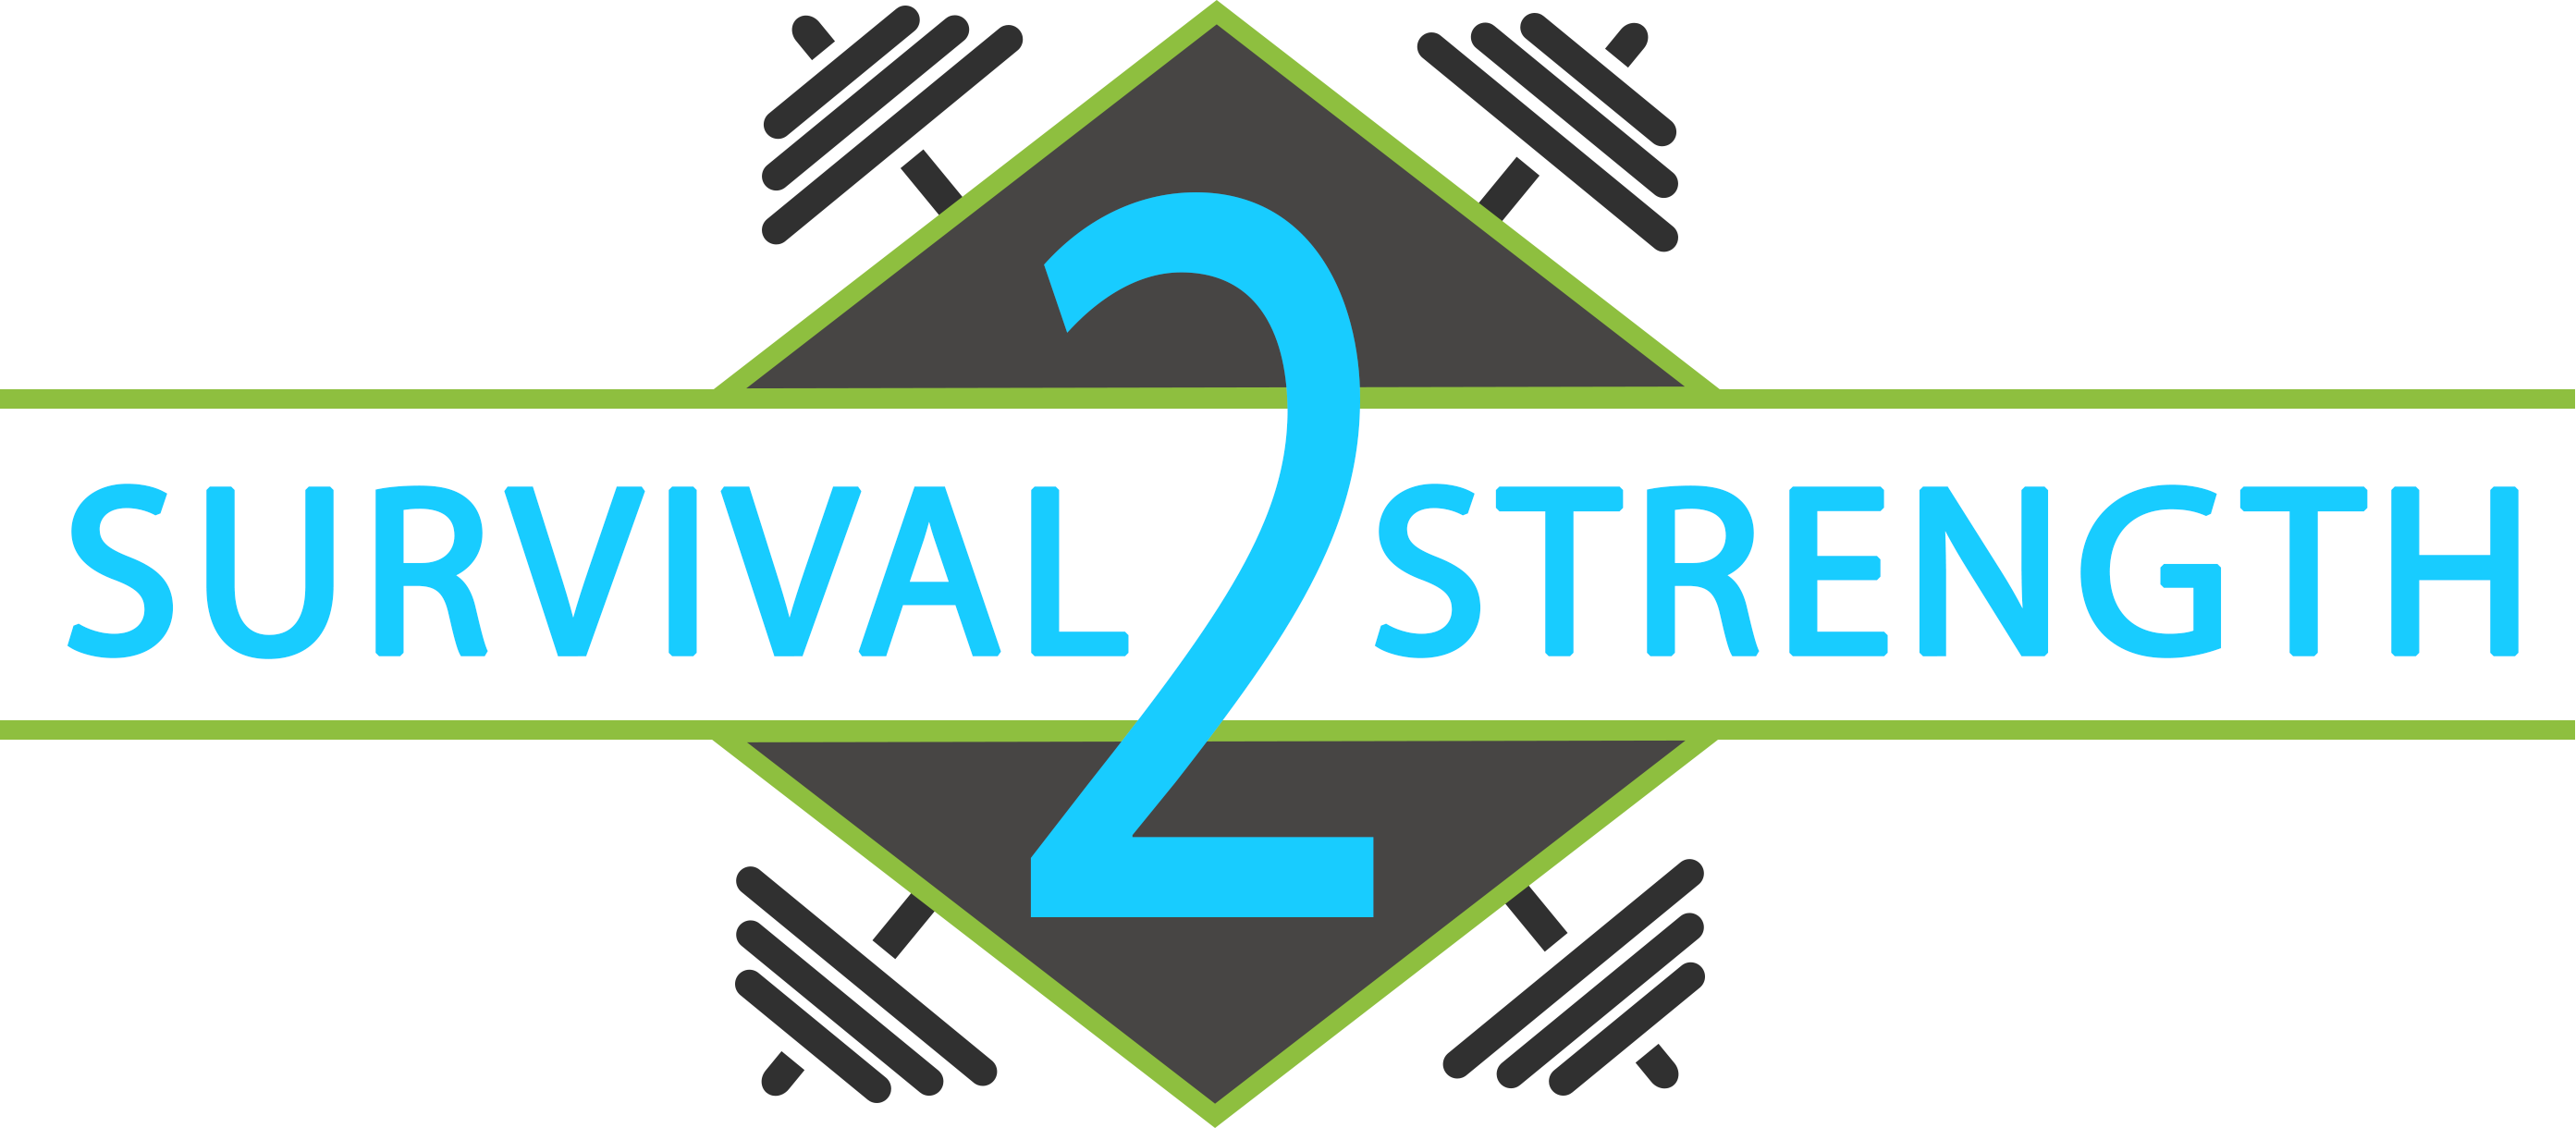 survival2strength logo